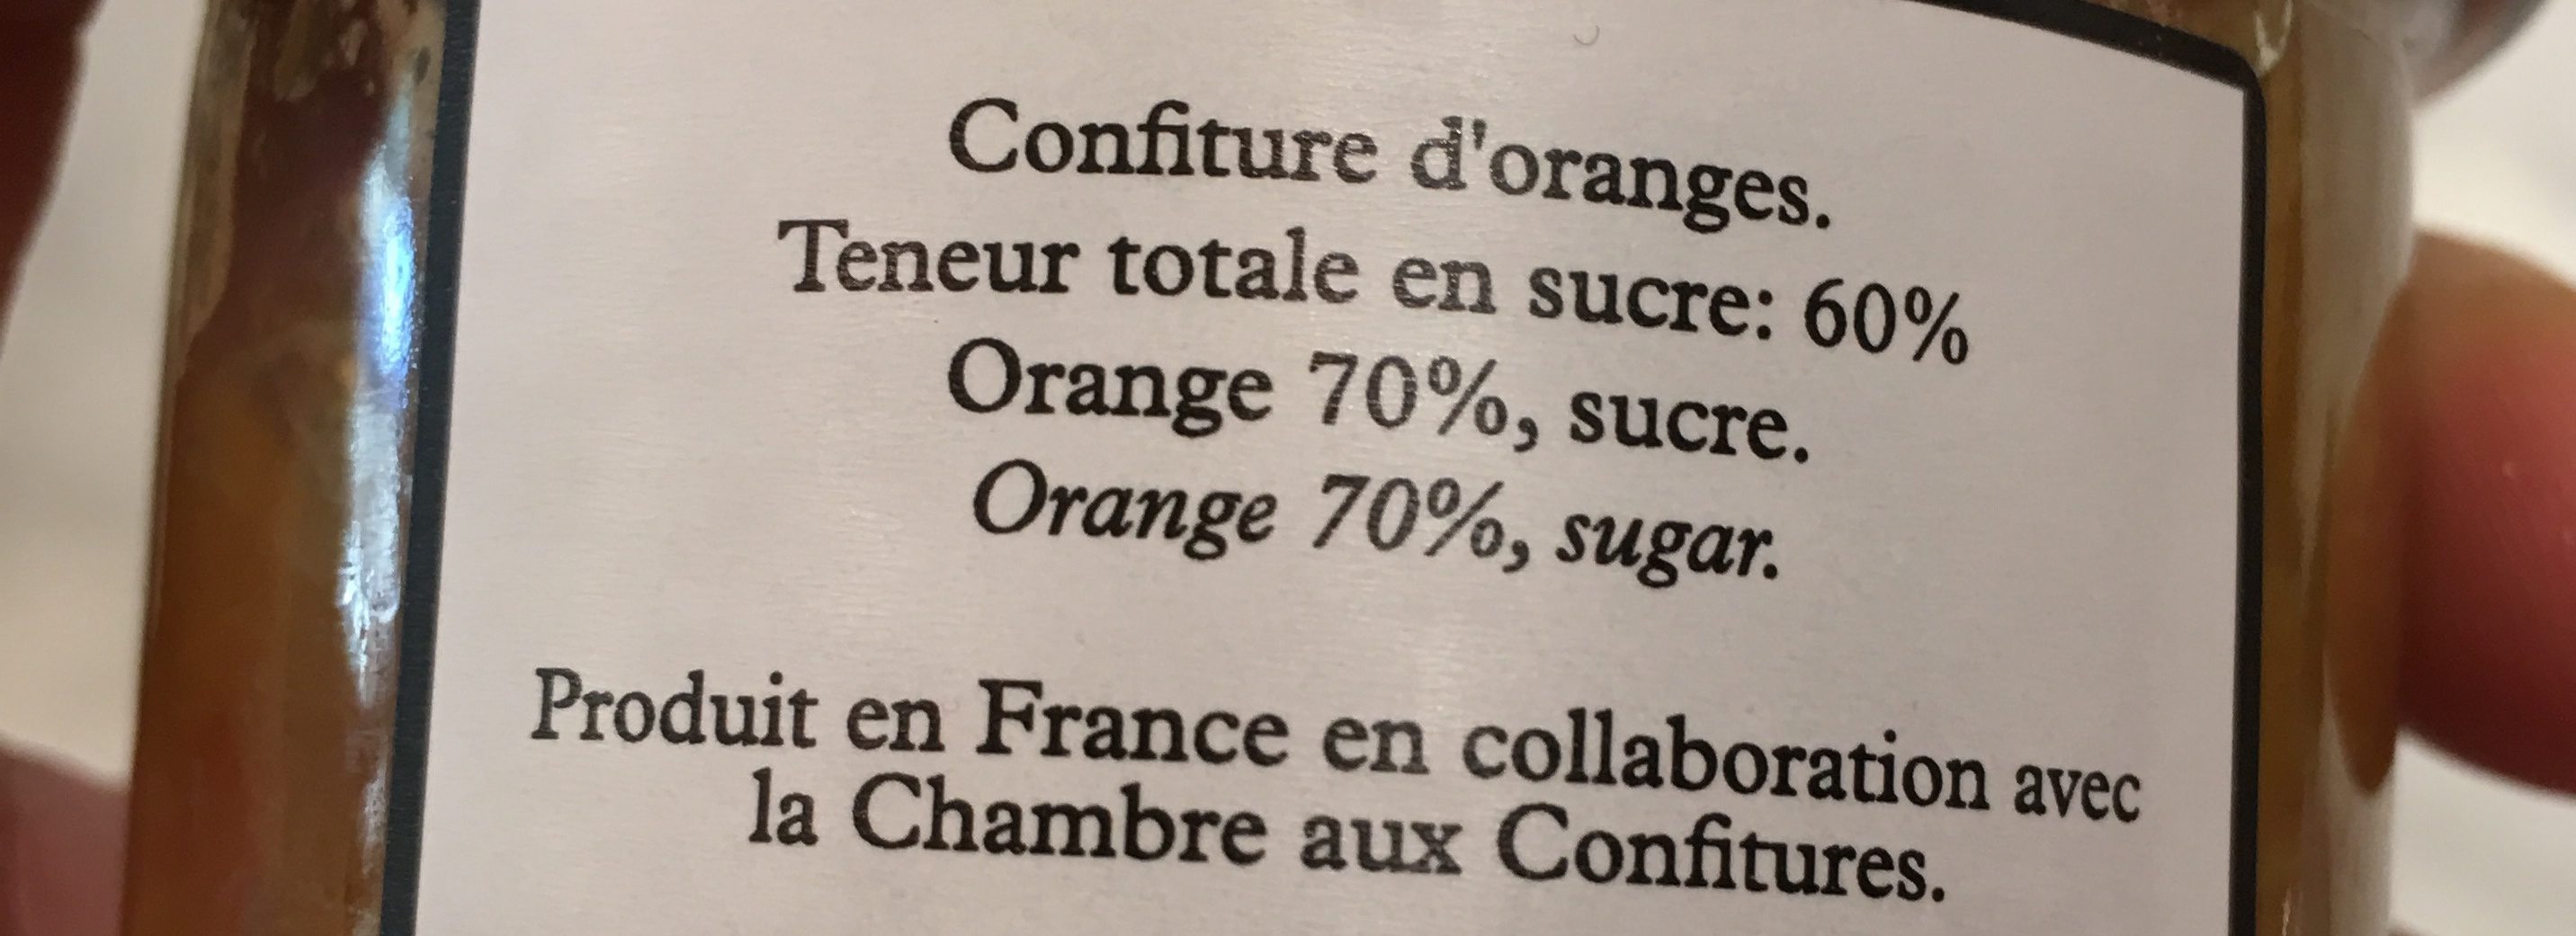 Confiture oranges - Ingredients - fr